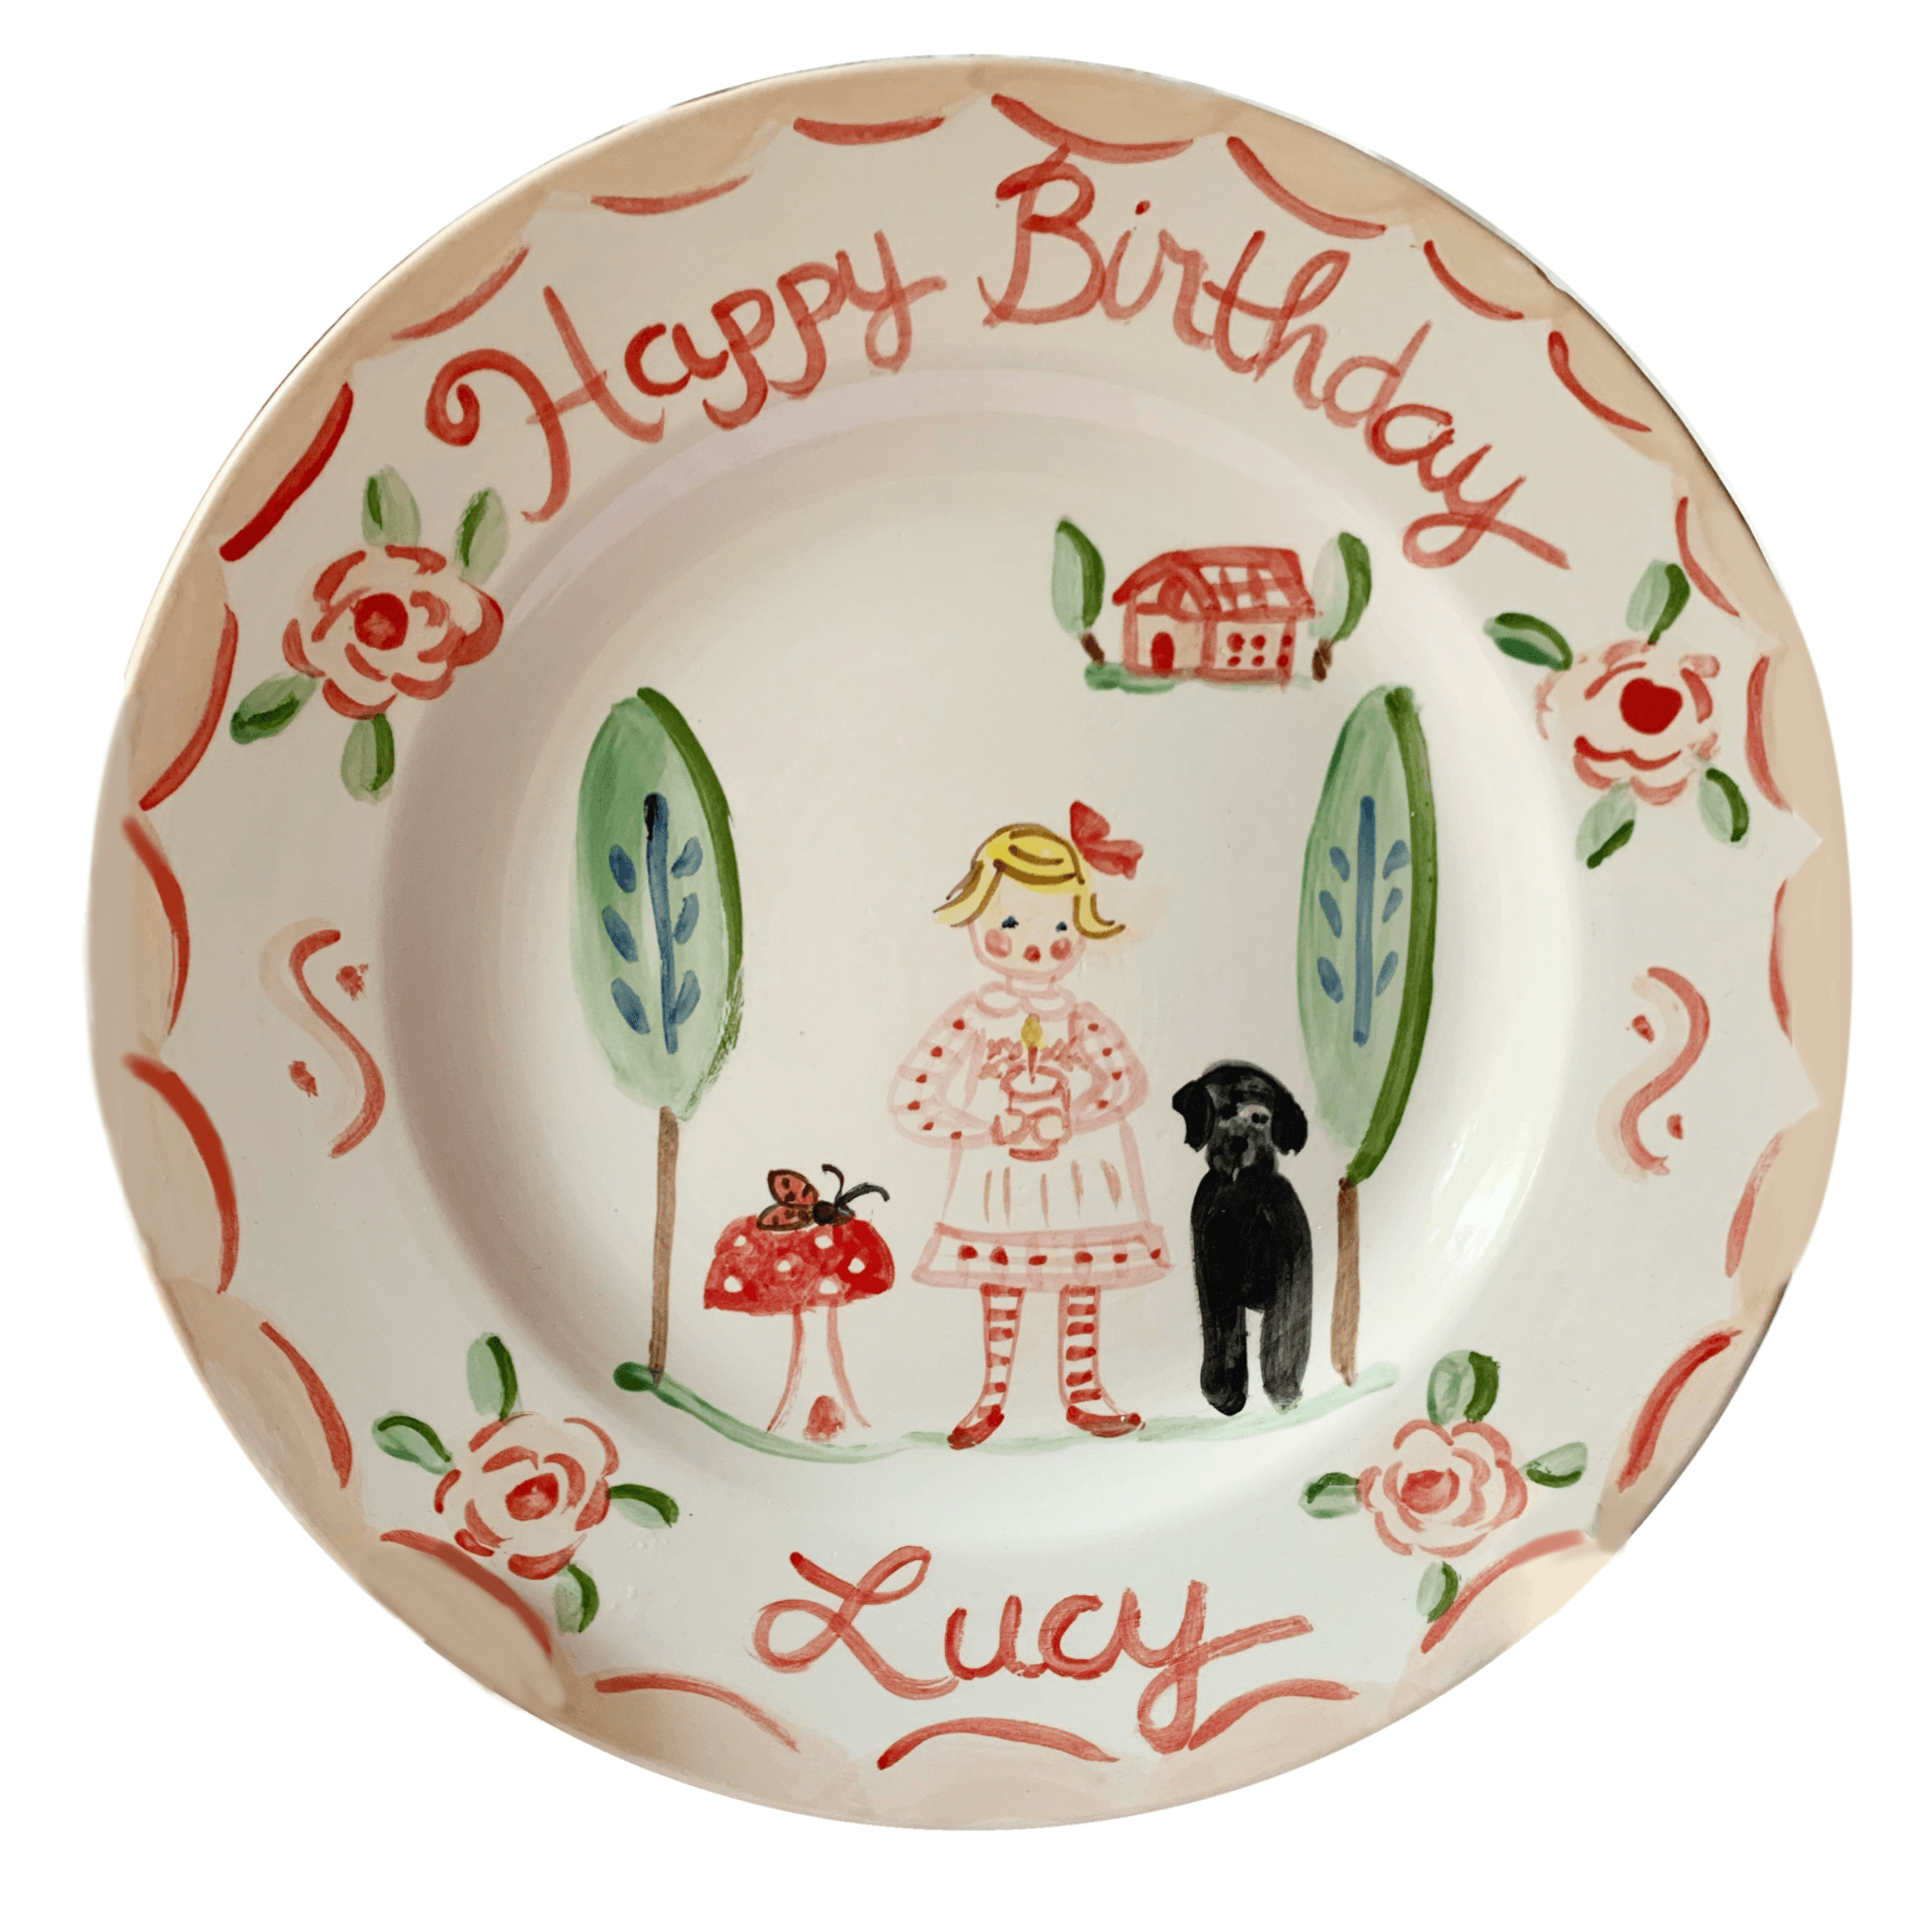 Birthday Plate - Mushroom and Black Dog - Tricia Lowenfield Design